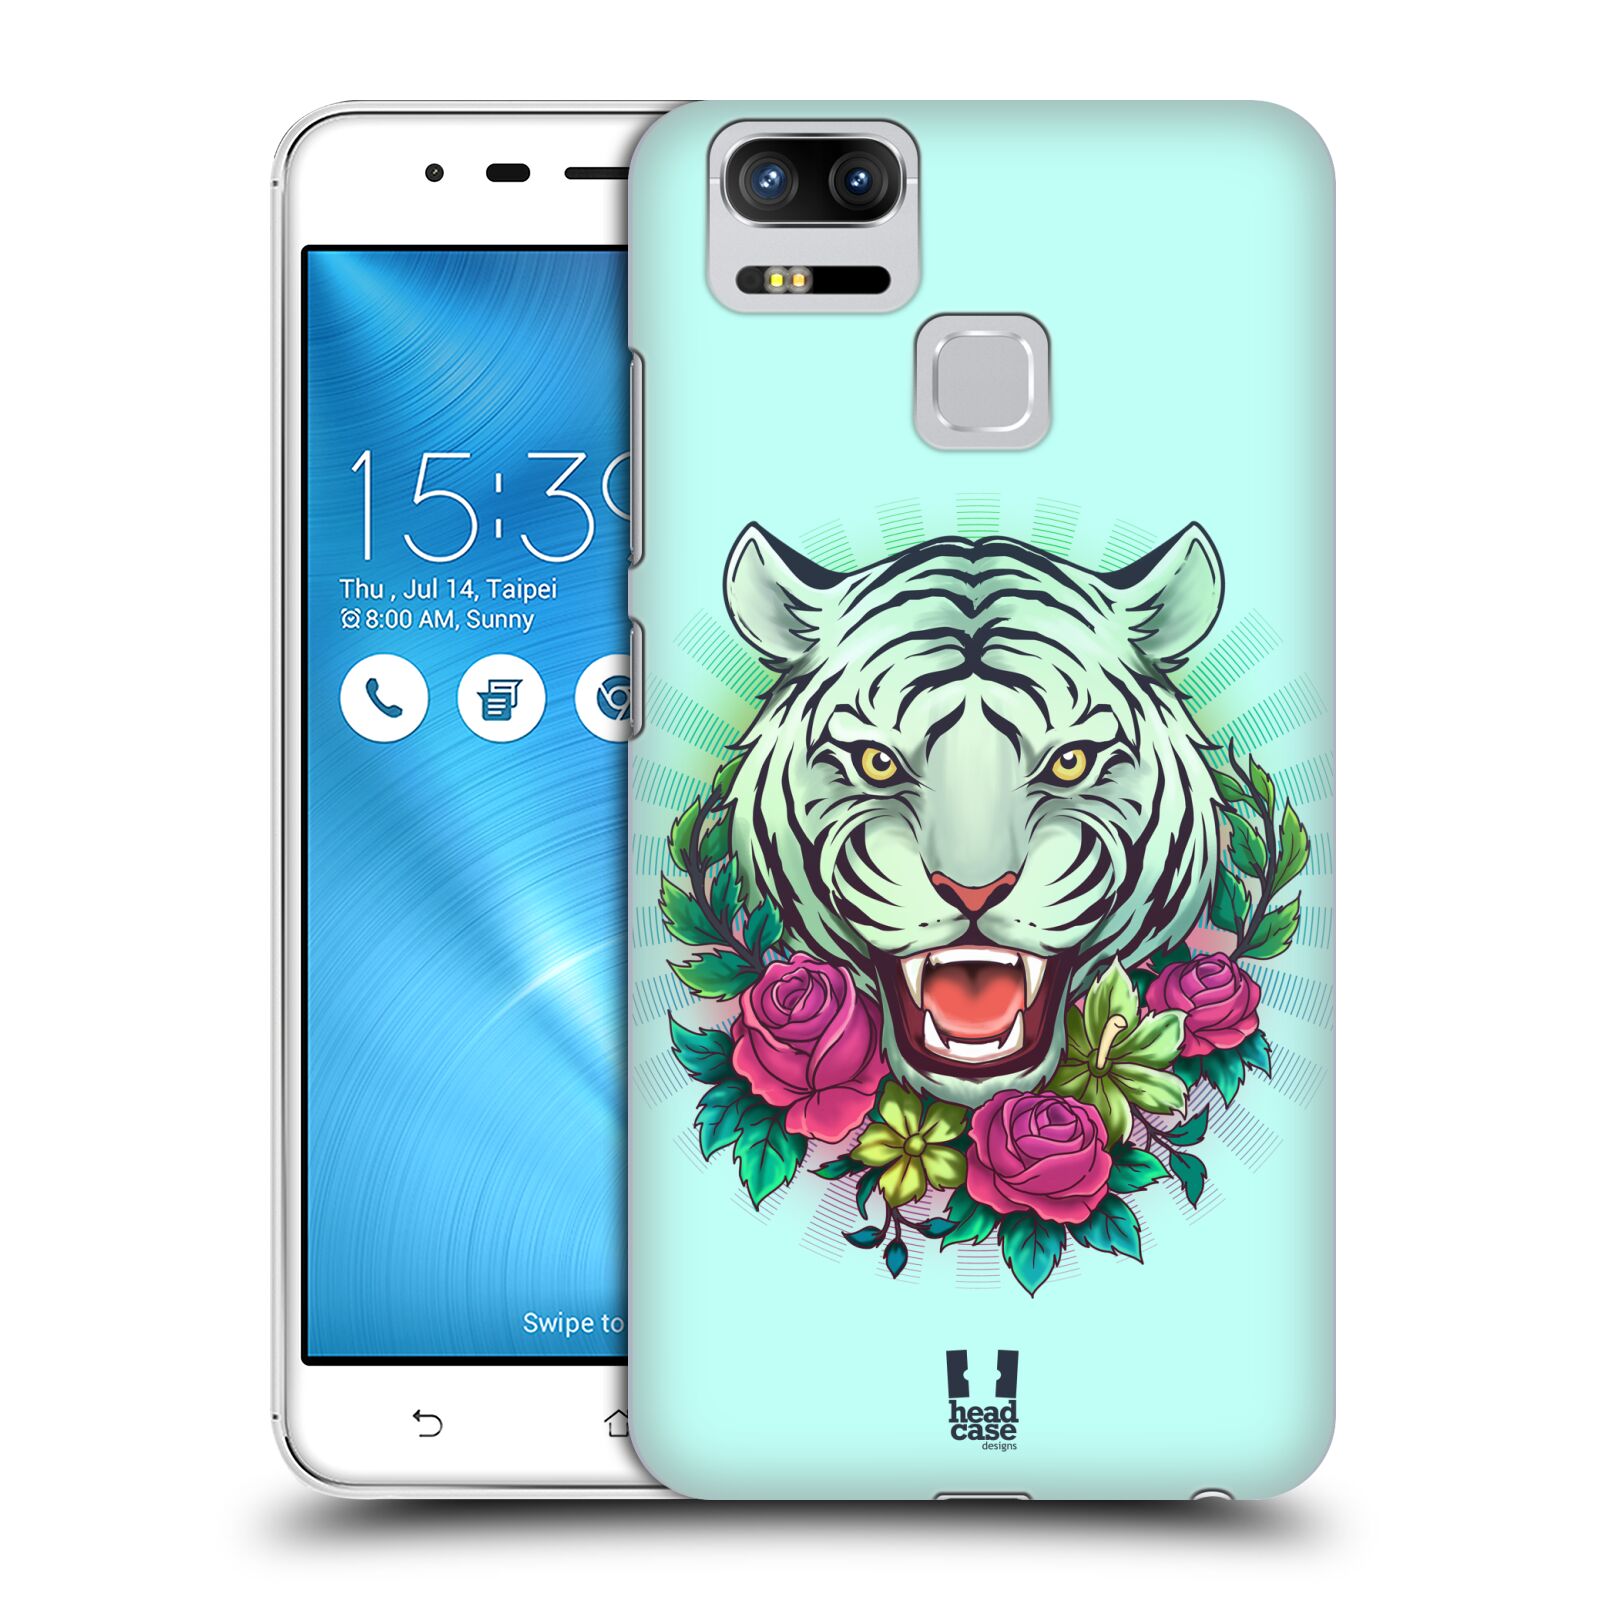 HEAD CASE plastový obal na mobil Asus Zenfone 3 Zoom ZE553KL vzor Flóra a Fauna tygr